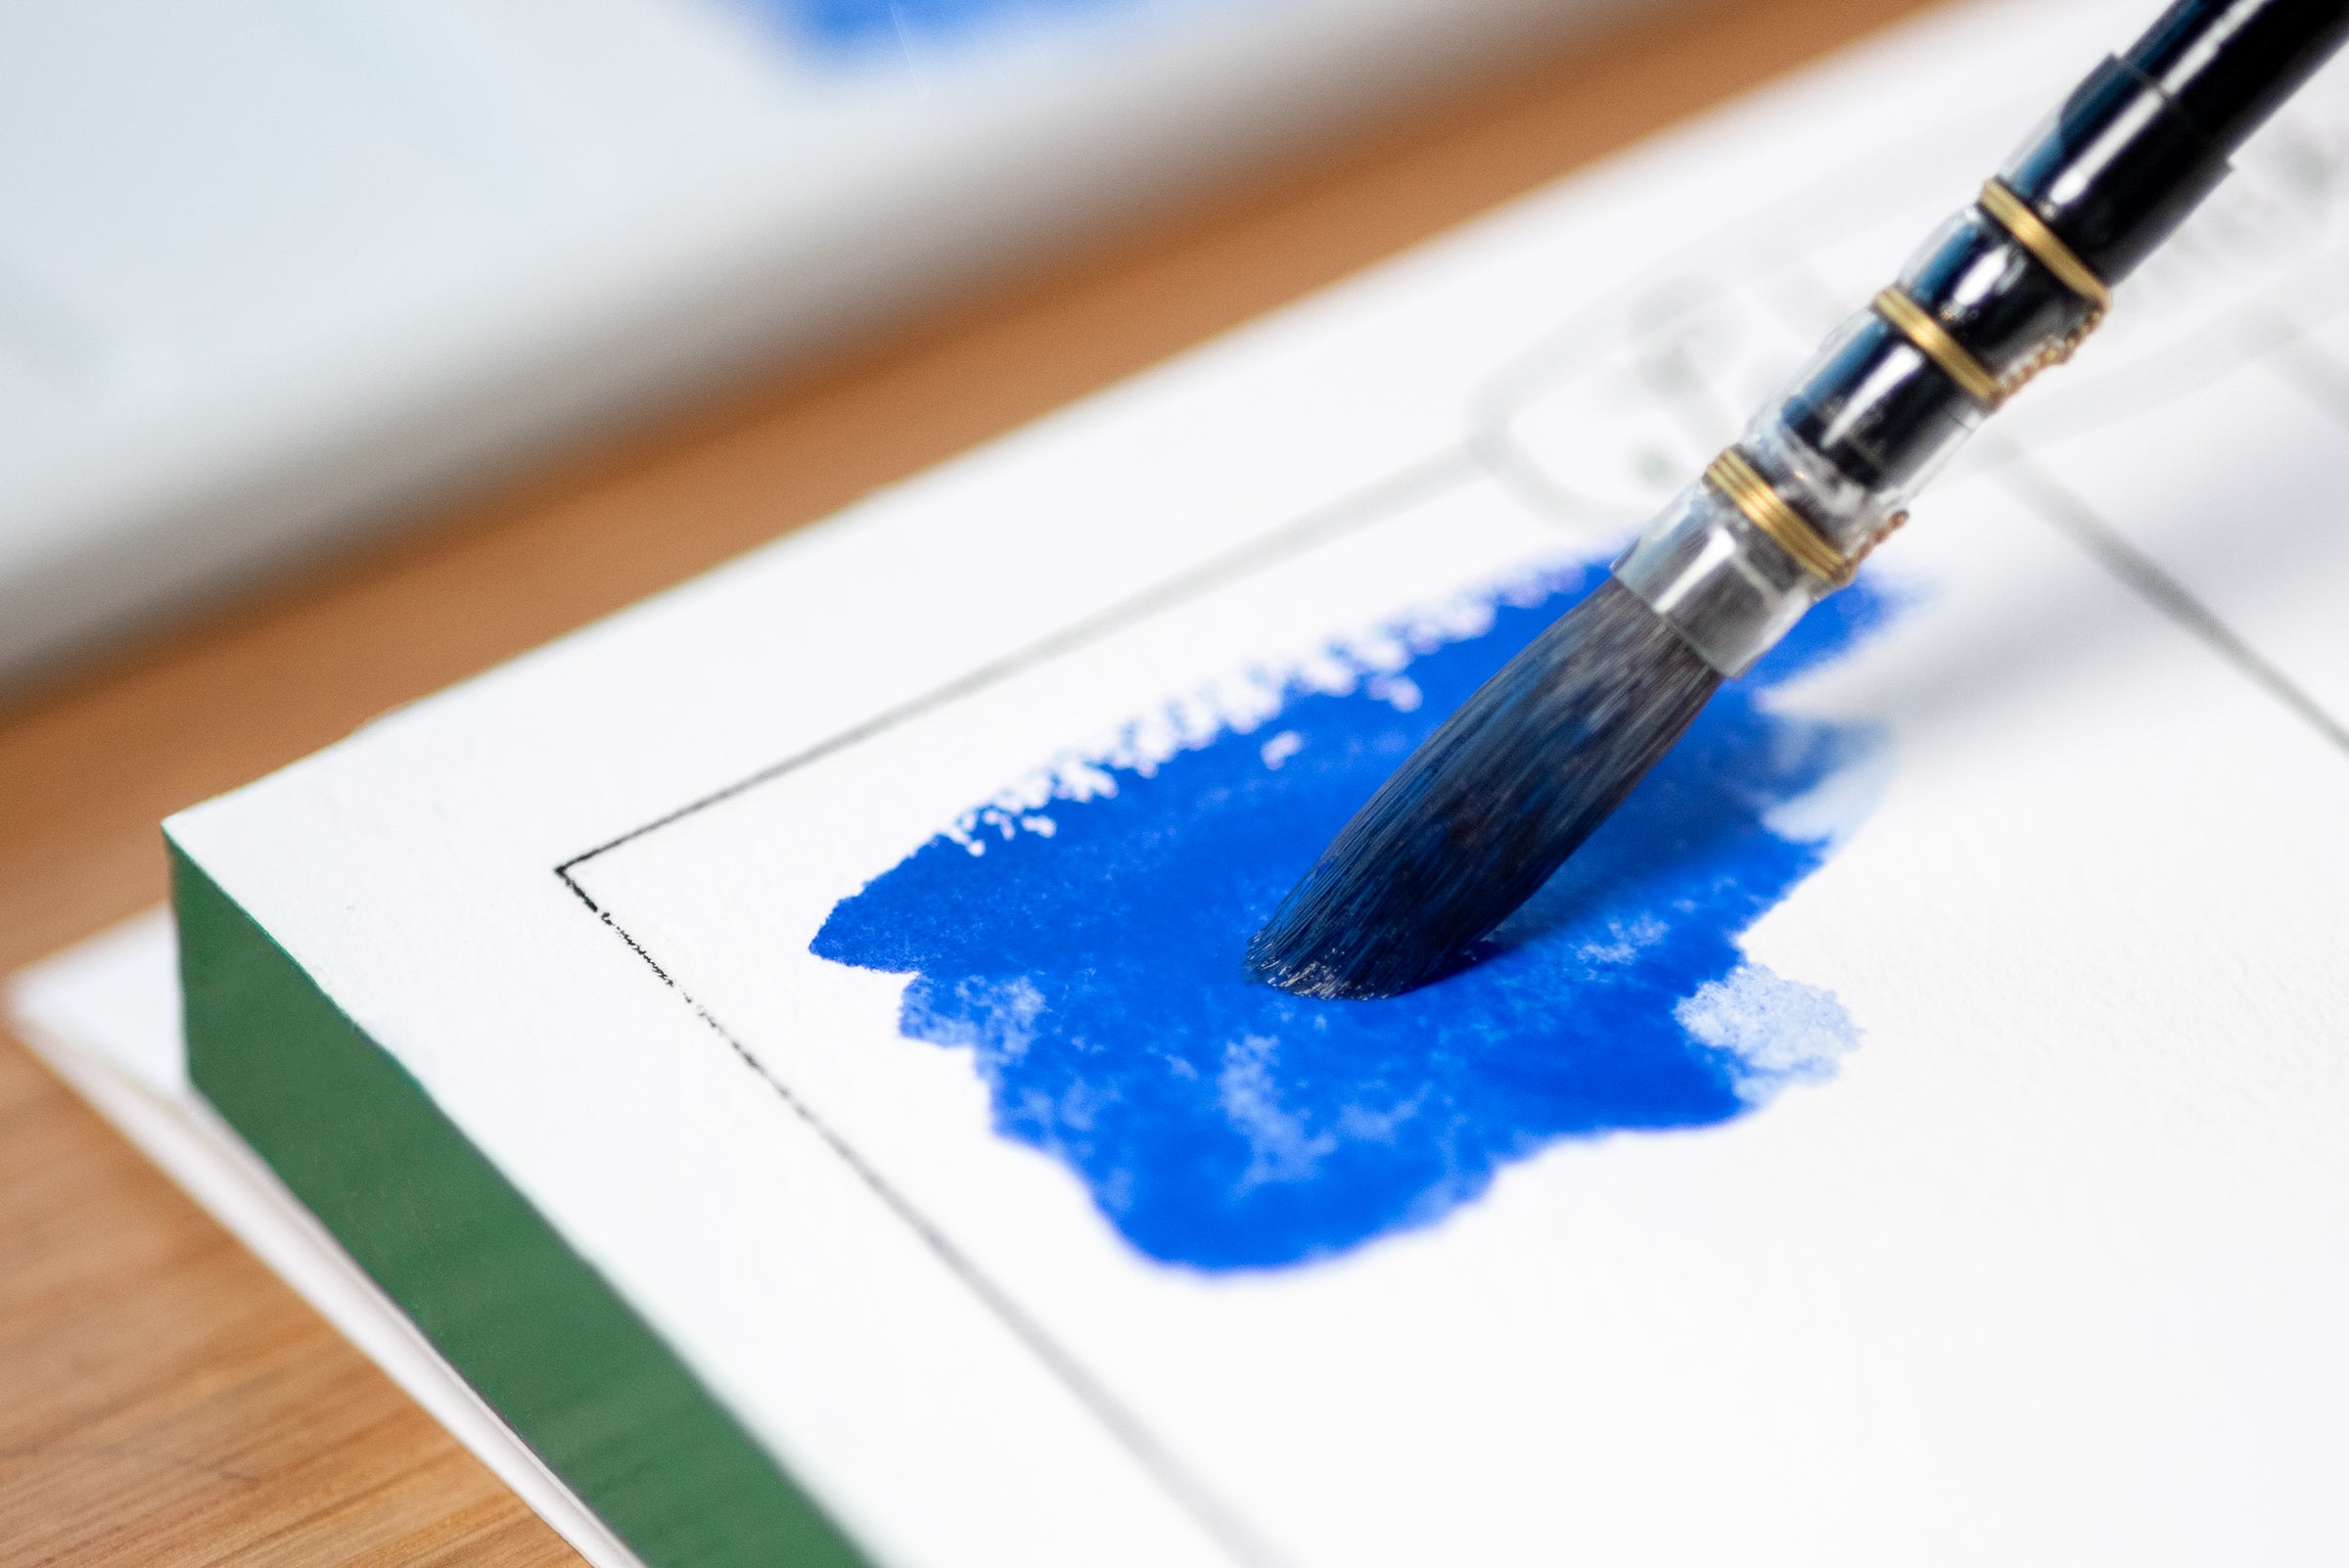 ink watercolor blue